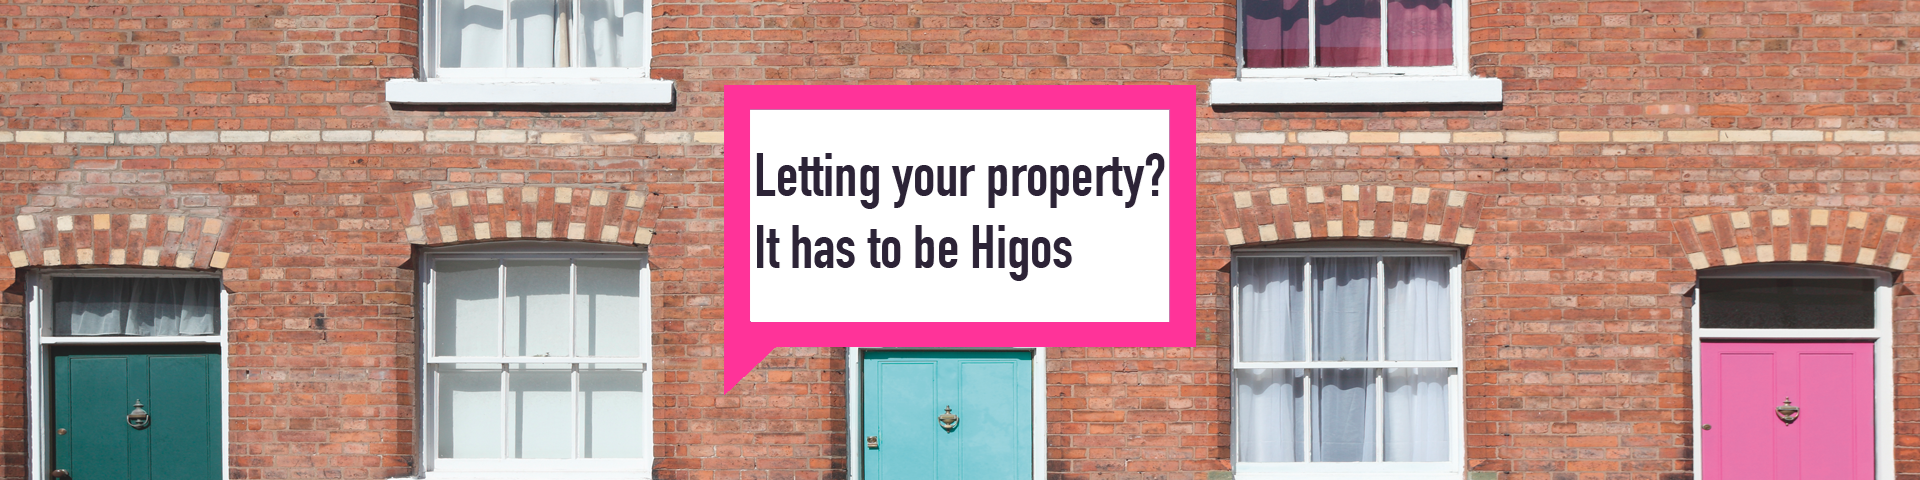 Higos let property